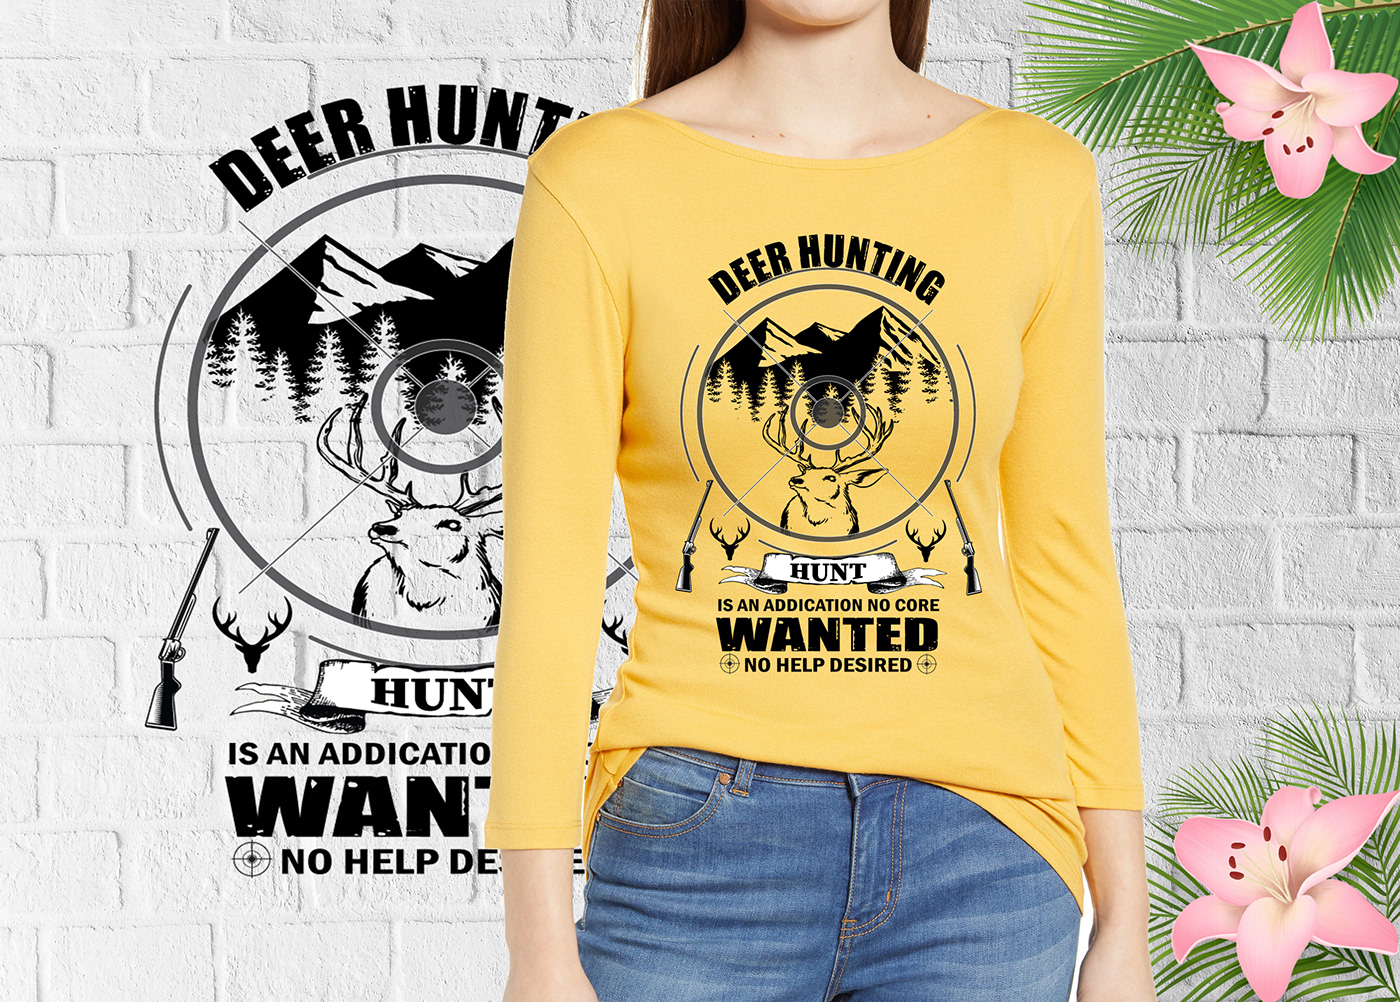 Deer Hunting T-Shirt Design on Behance